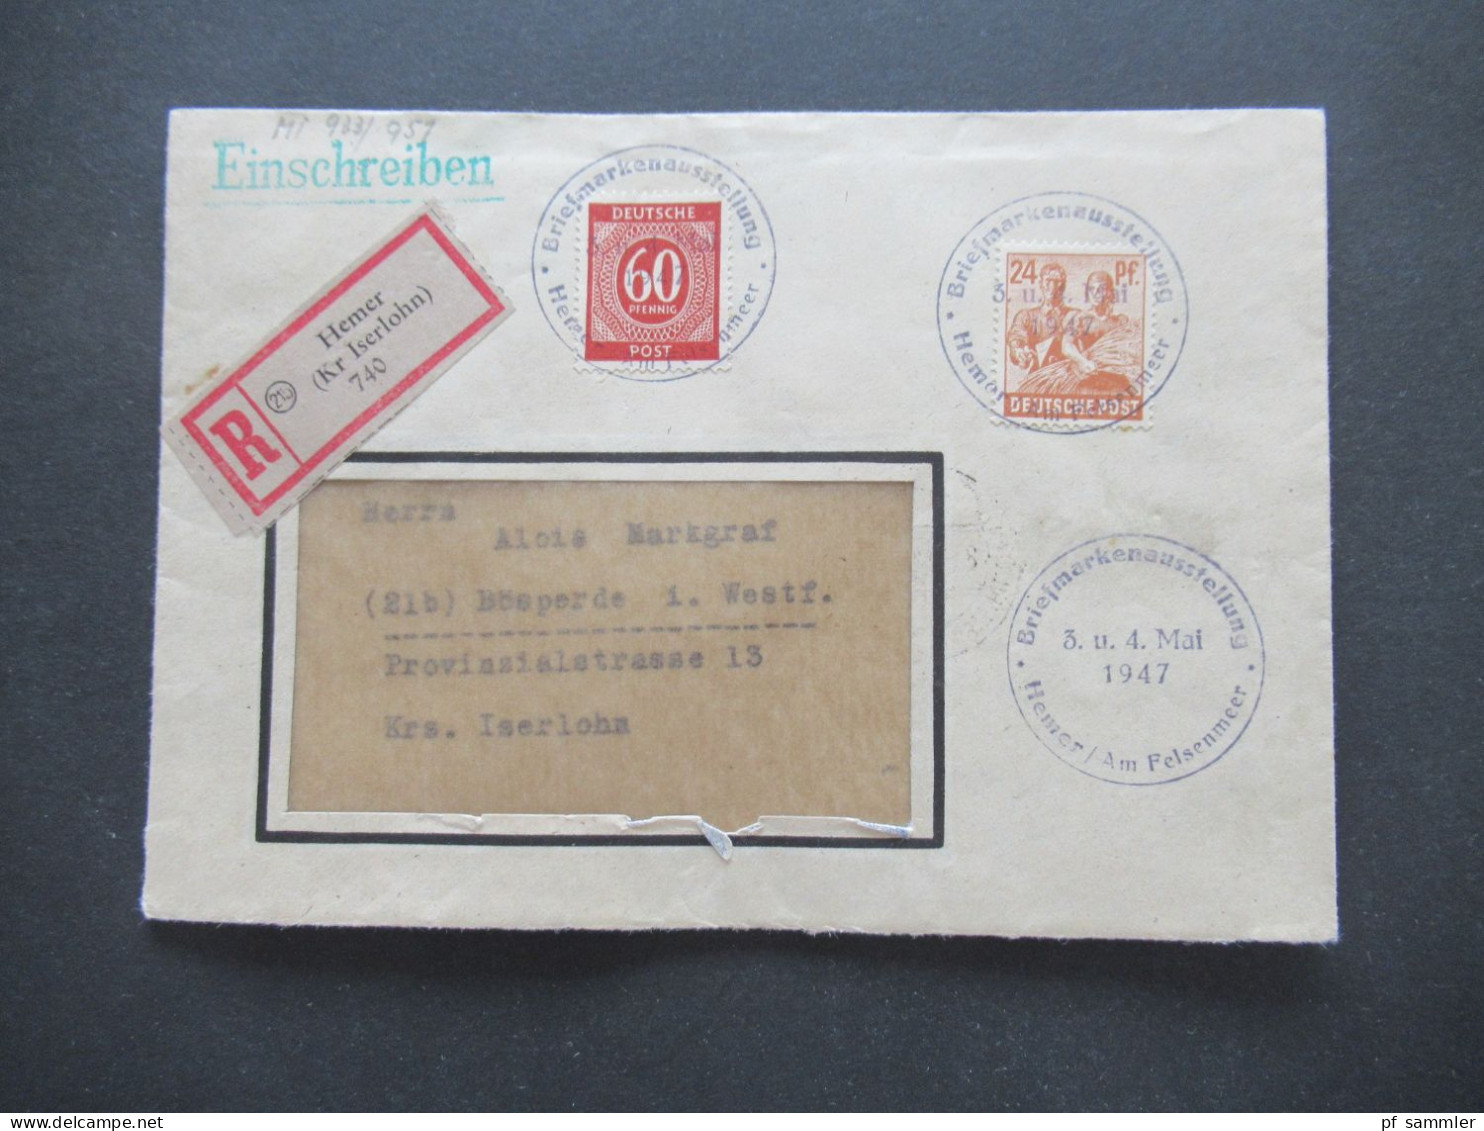 Kontrollrat 1947 MiF Einschreiben Hemer (Kr Iserlohn) Mit Sonderstempel K1 Briefmarkenausstellung Hemer Am Felsenmeer - Covers & Documents